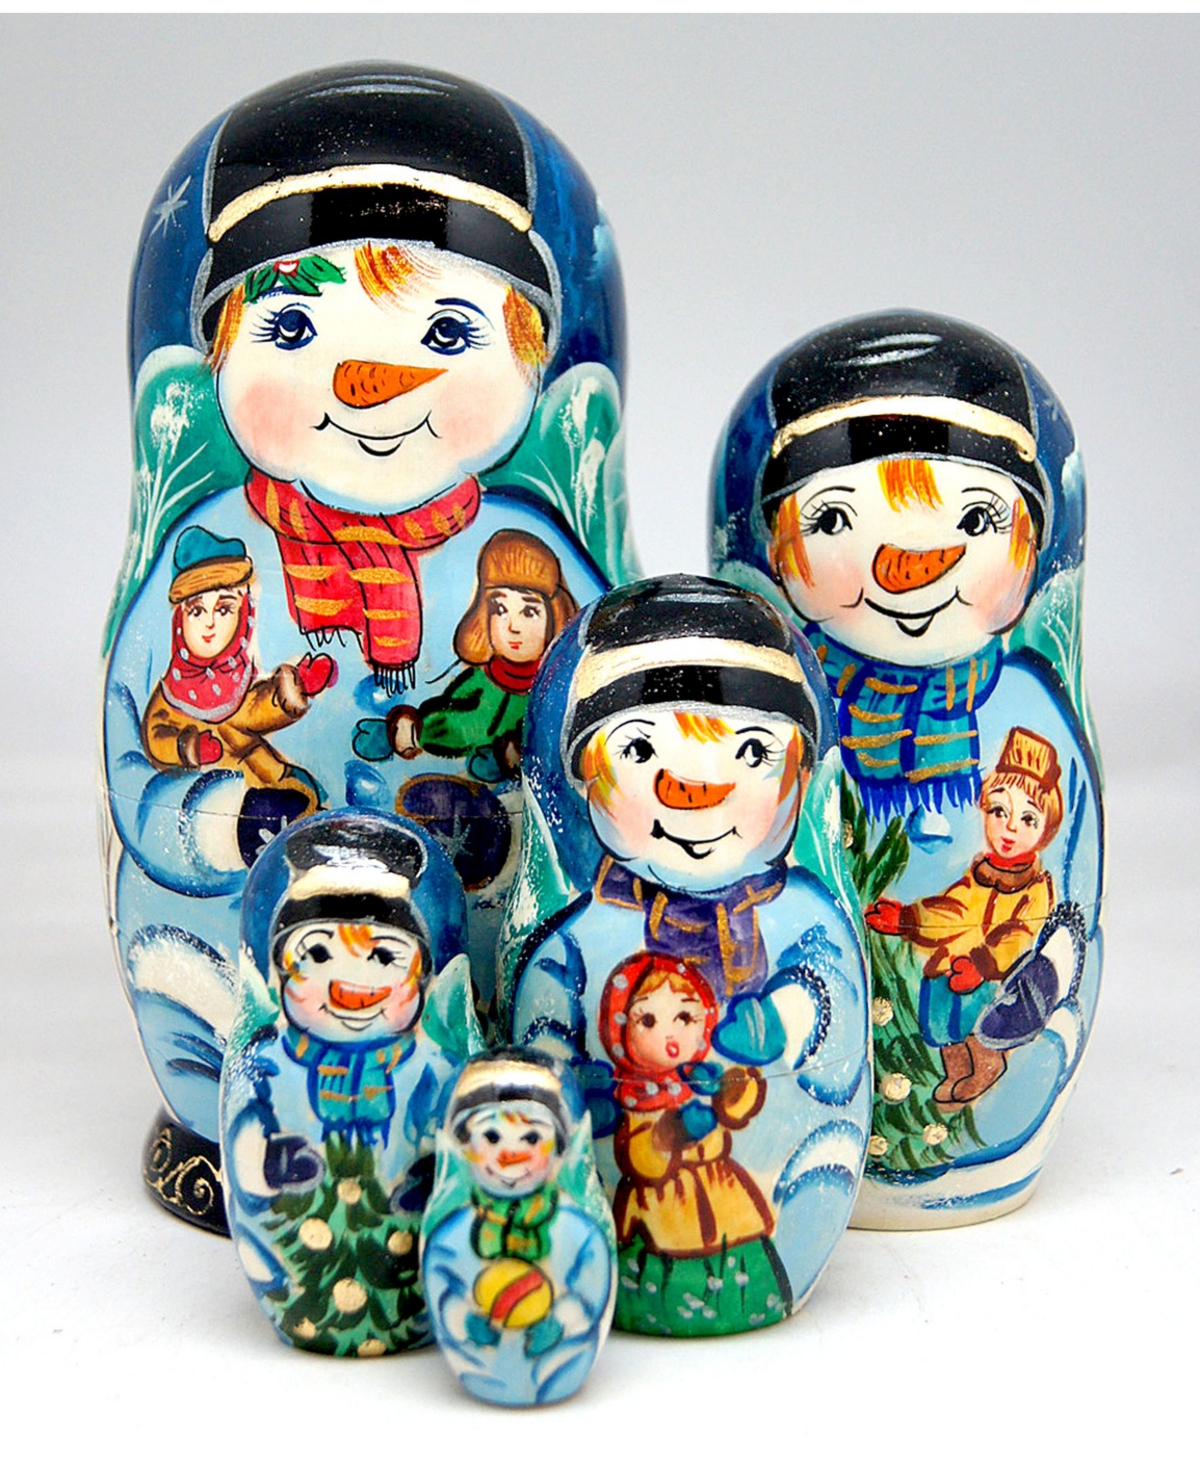 Mr. Snowman 5 Piece Russian Matryoshka Nested Doll Set - Multi